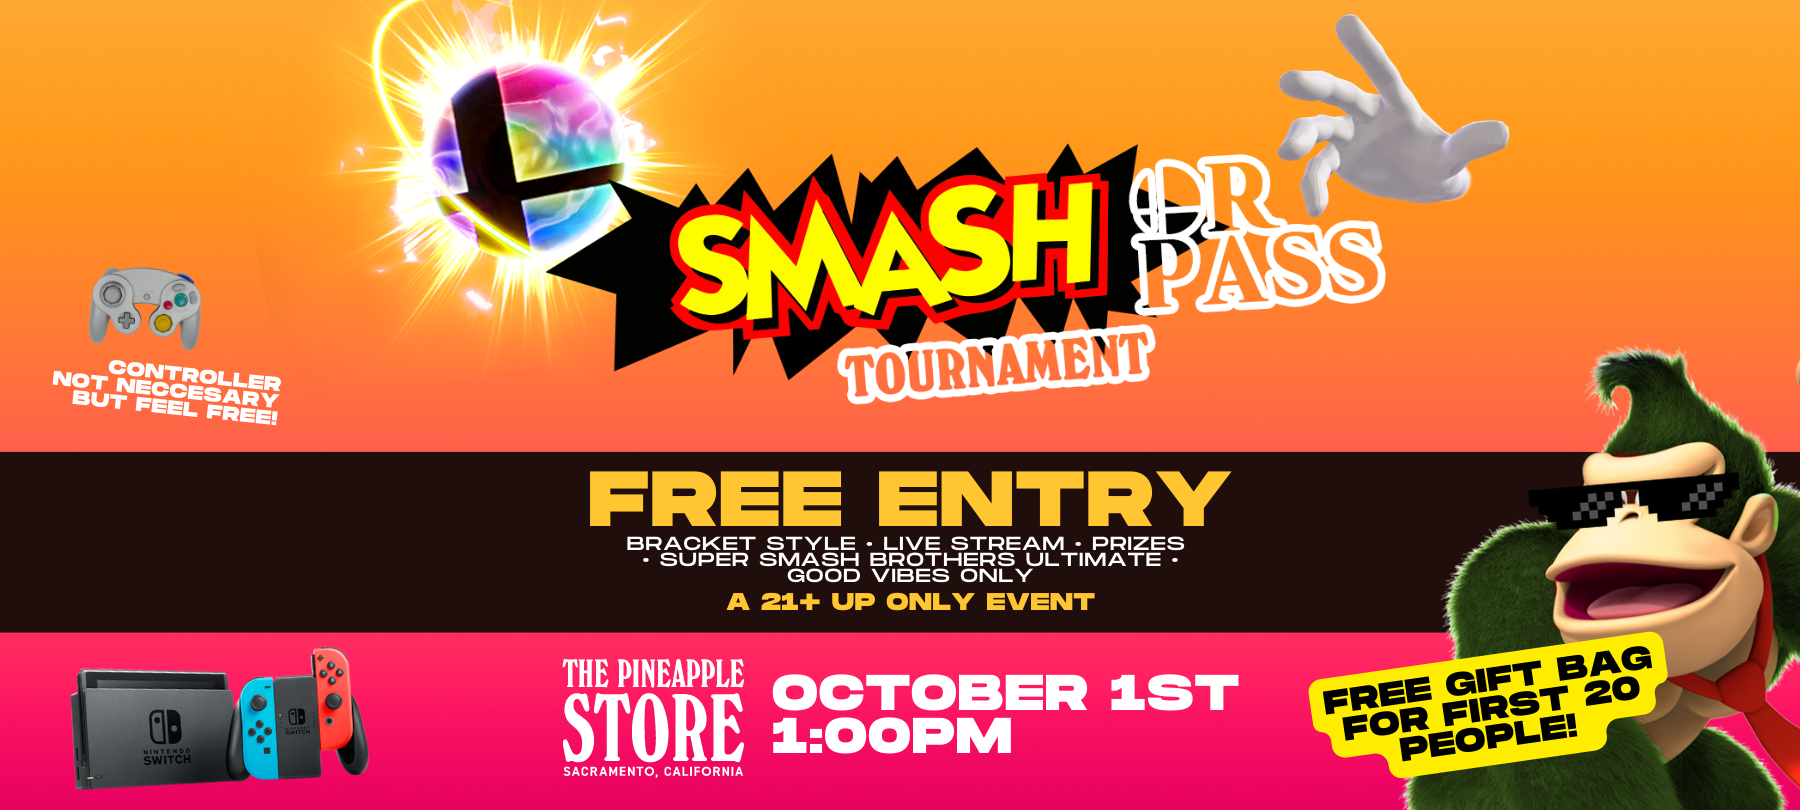 SMASH or PASS: Smash Bros Tournament